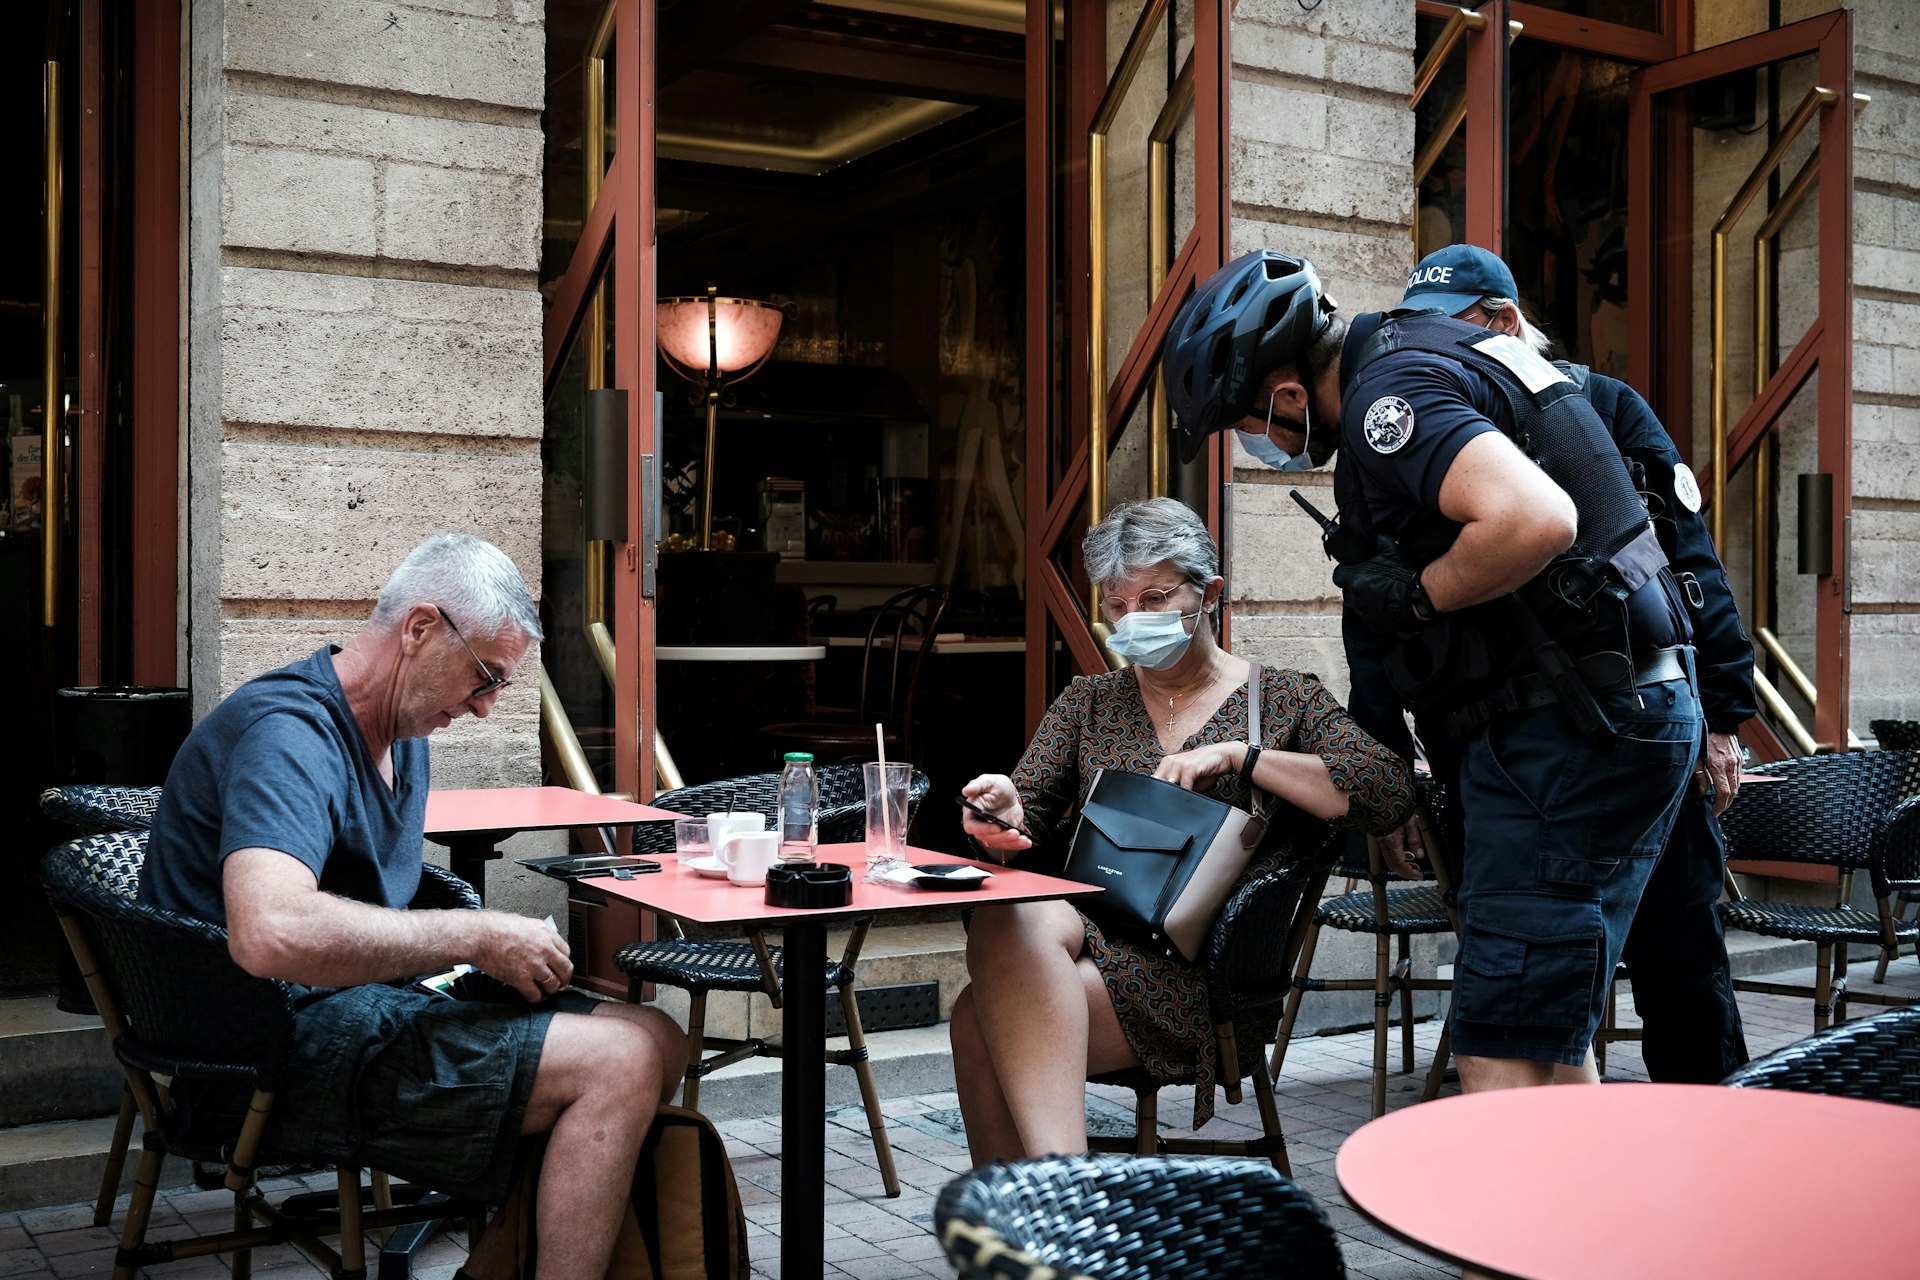 A policeman checks the health pass of a customer at a bar in Bordeaux